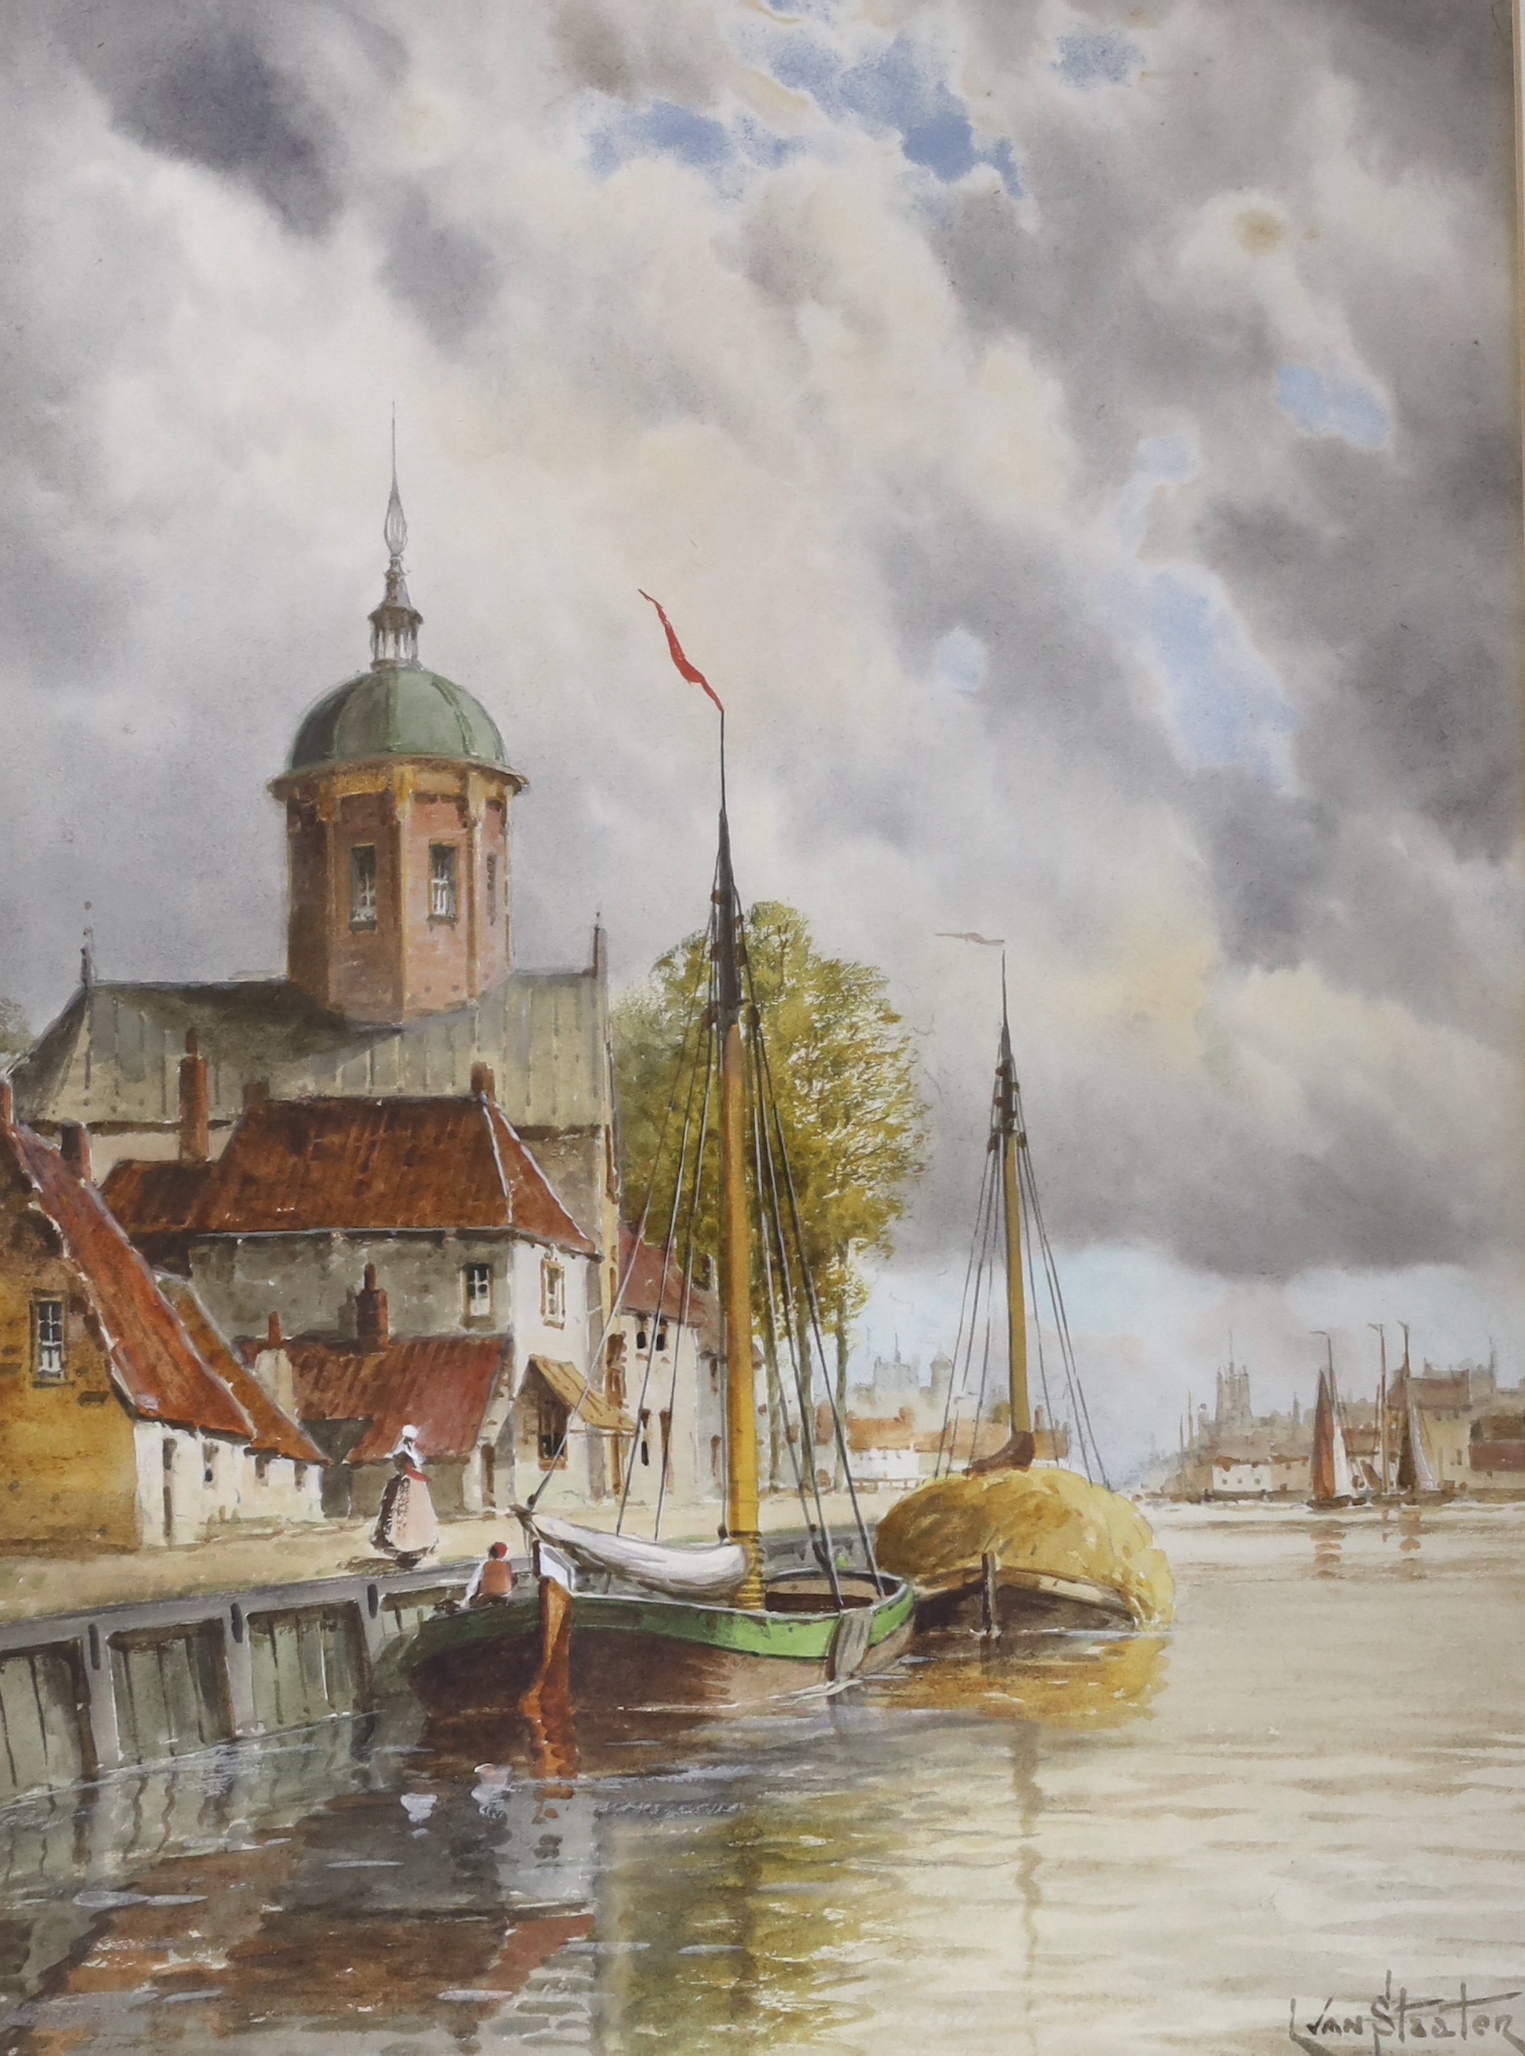 Louis Van Staaten (1859-1924), watercolour, Dutch canal scene, signed, 39 x 29cm